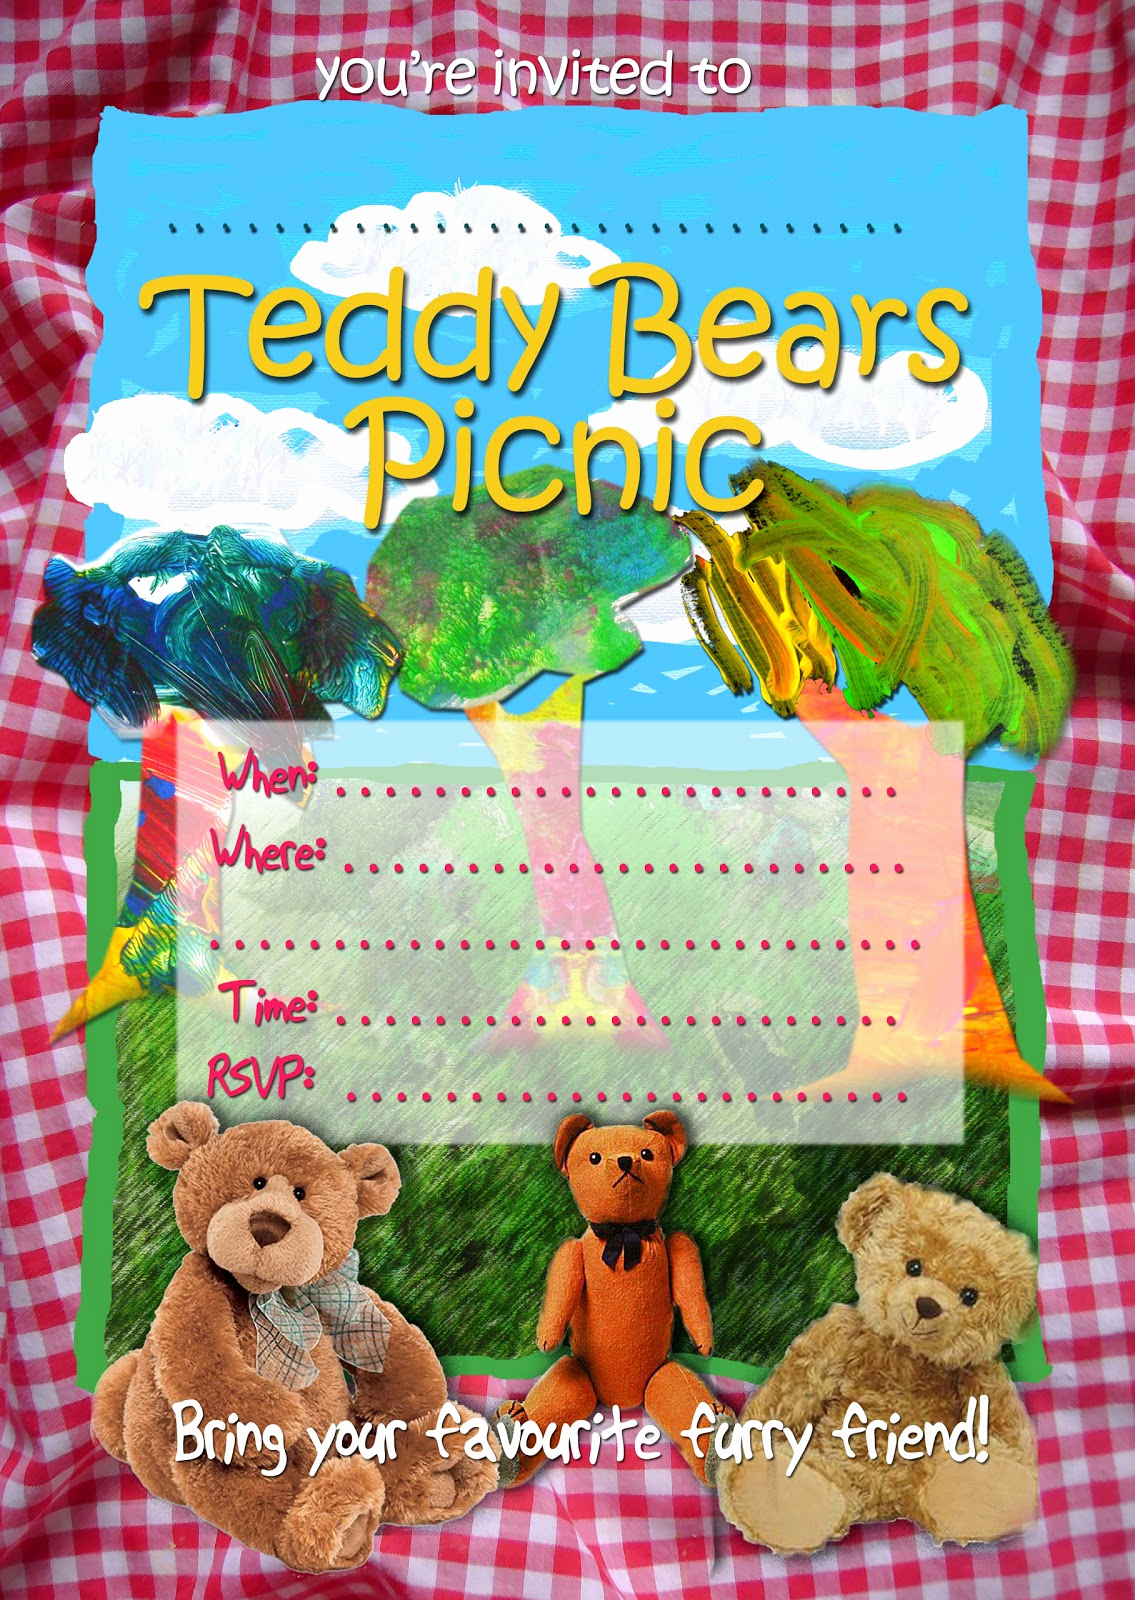 Teddy Bear Picnic Invitation Inspirational Free Kids Party Invitations Teddy Bears Picnic Invitation